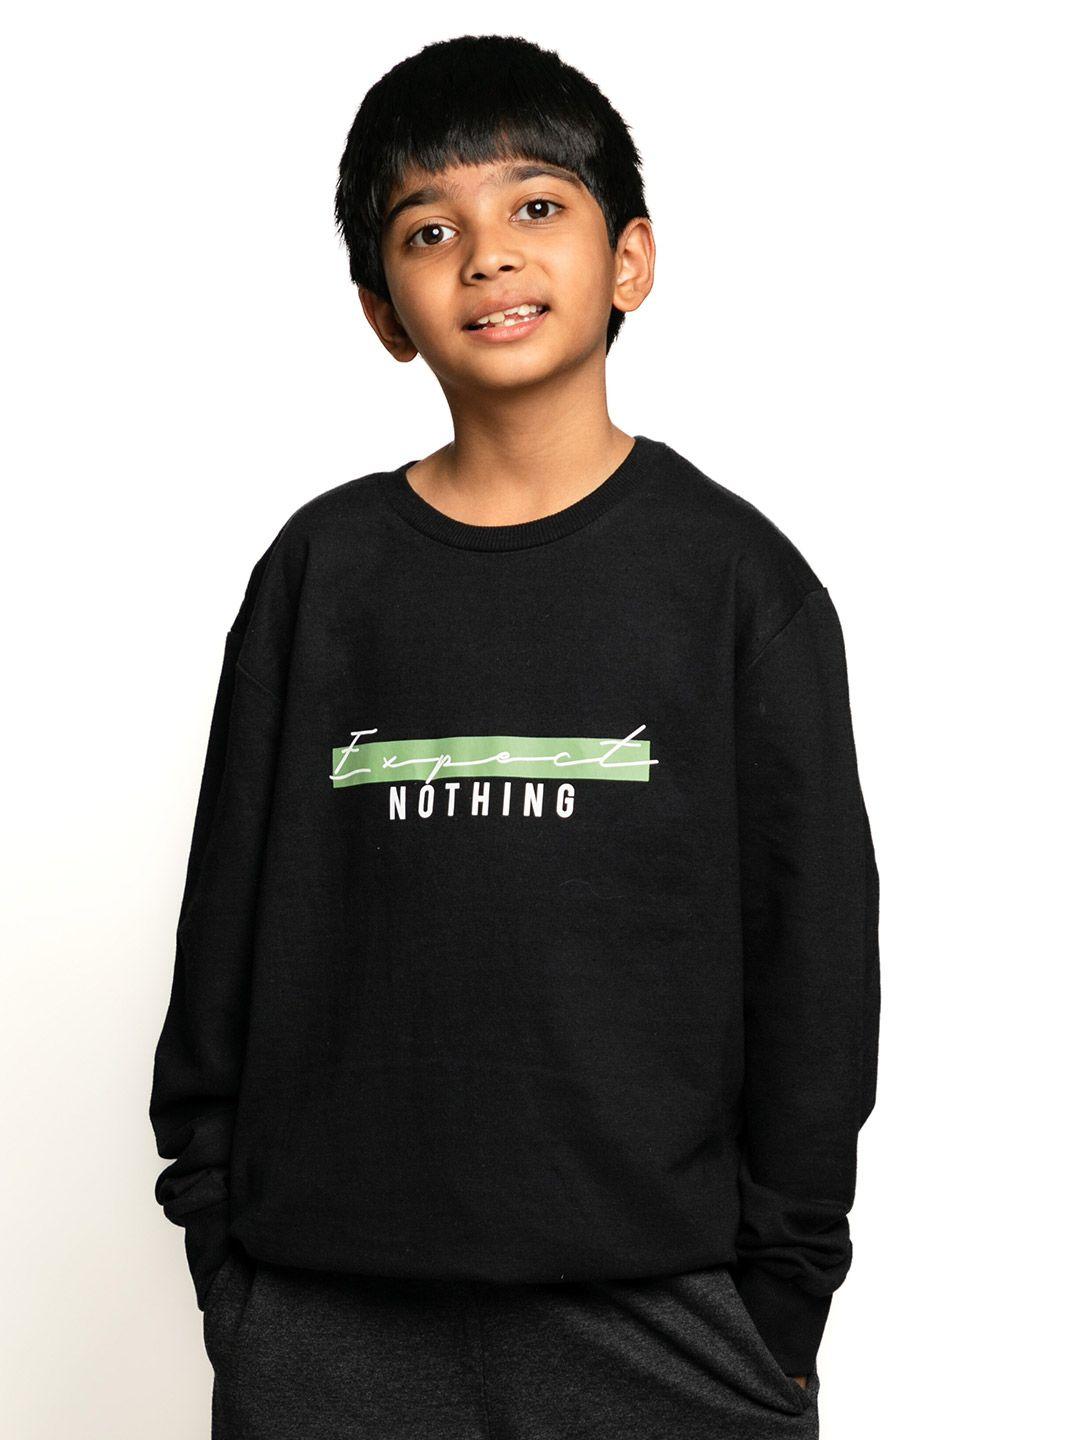 baesd boys typography printed sweatshirt